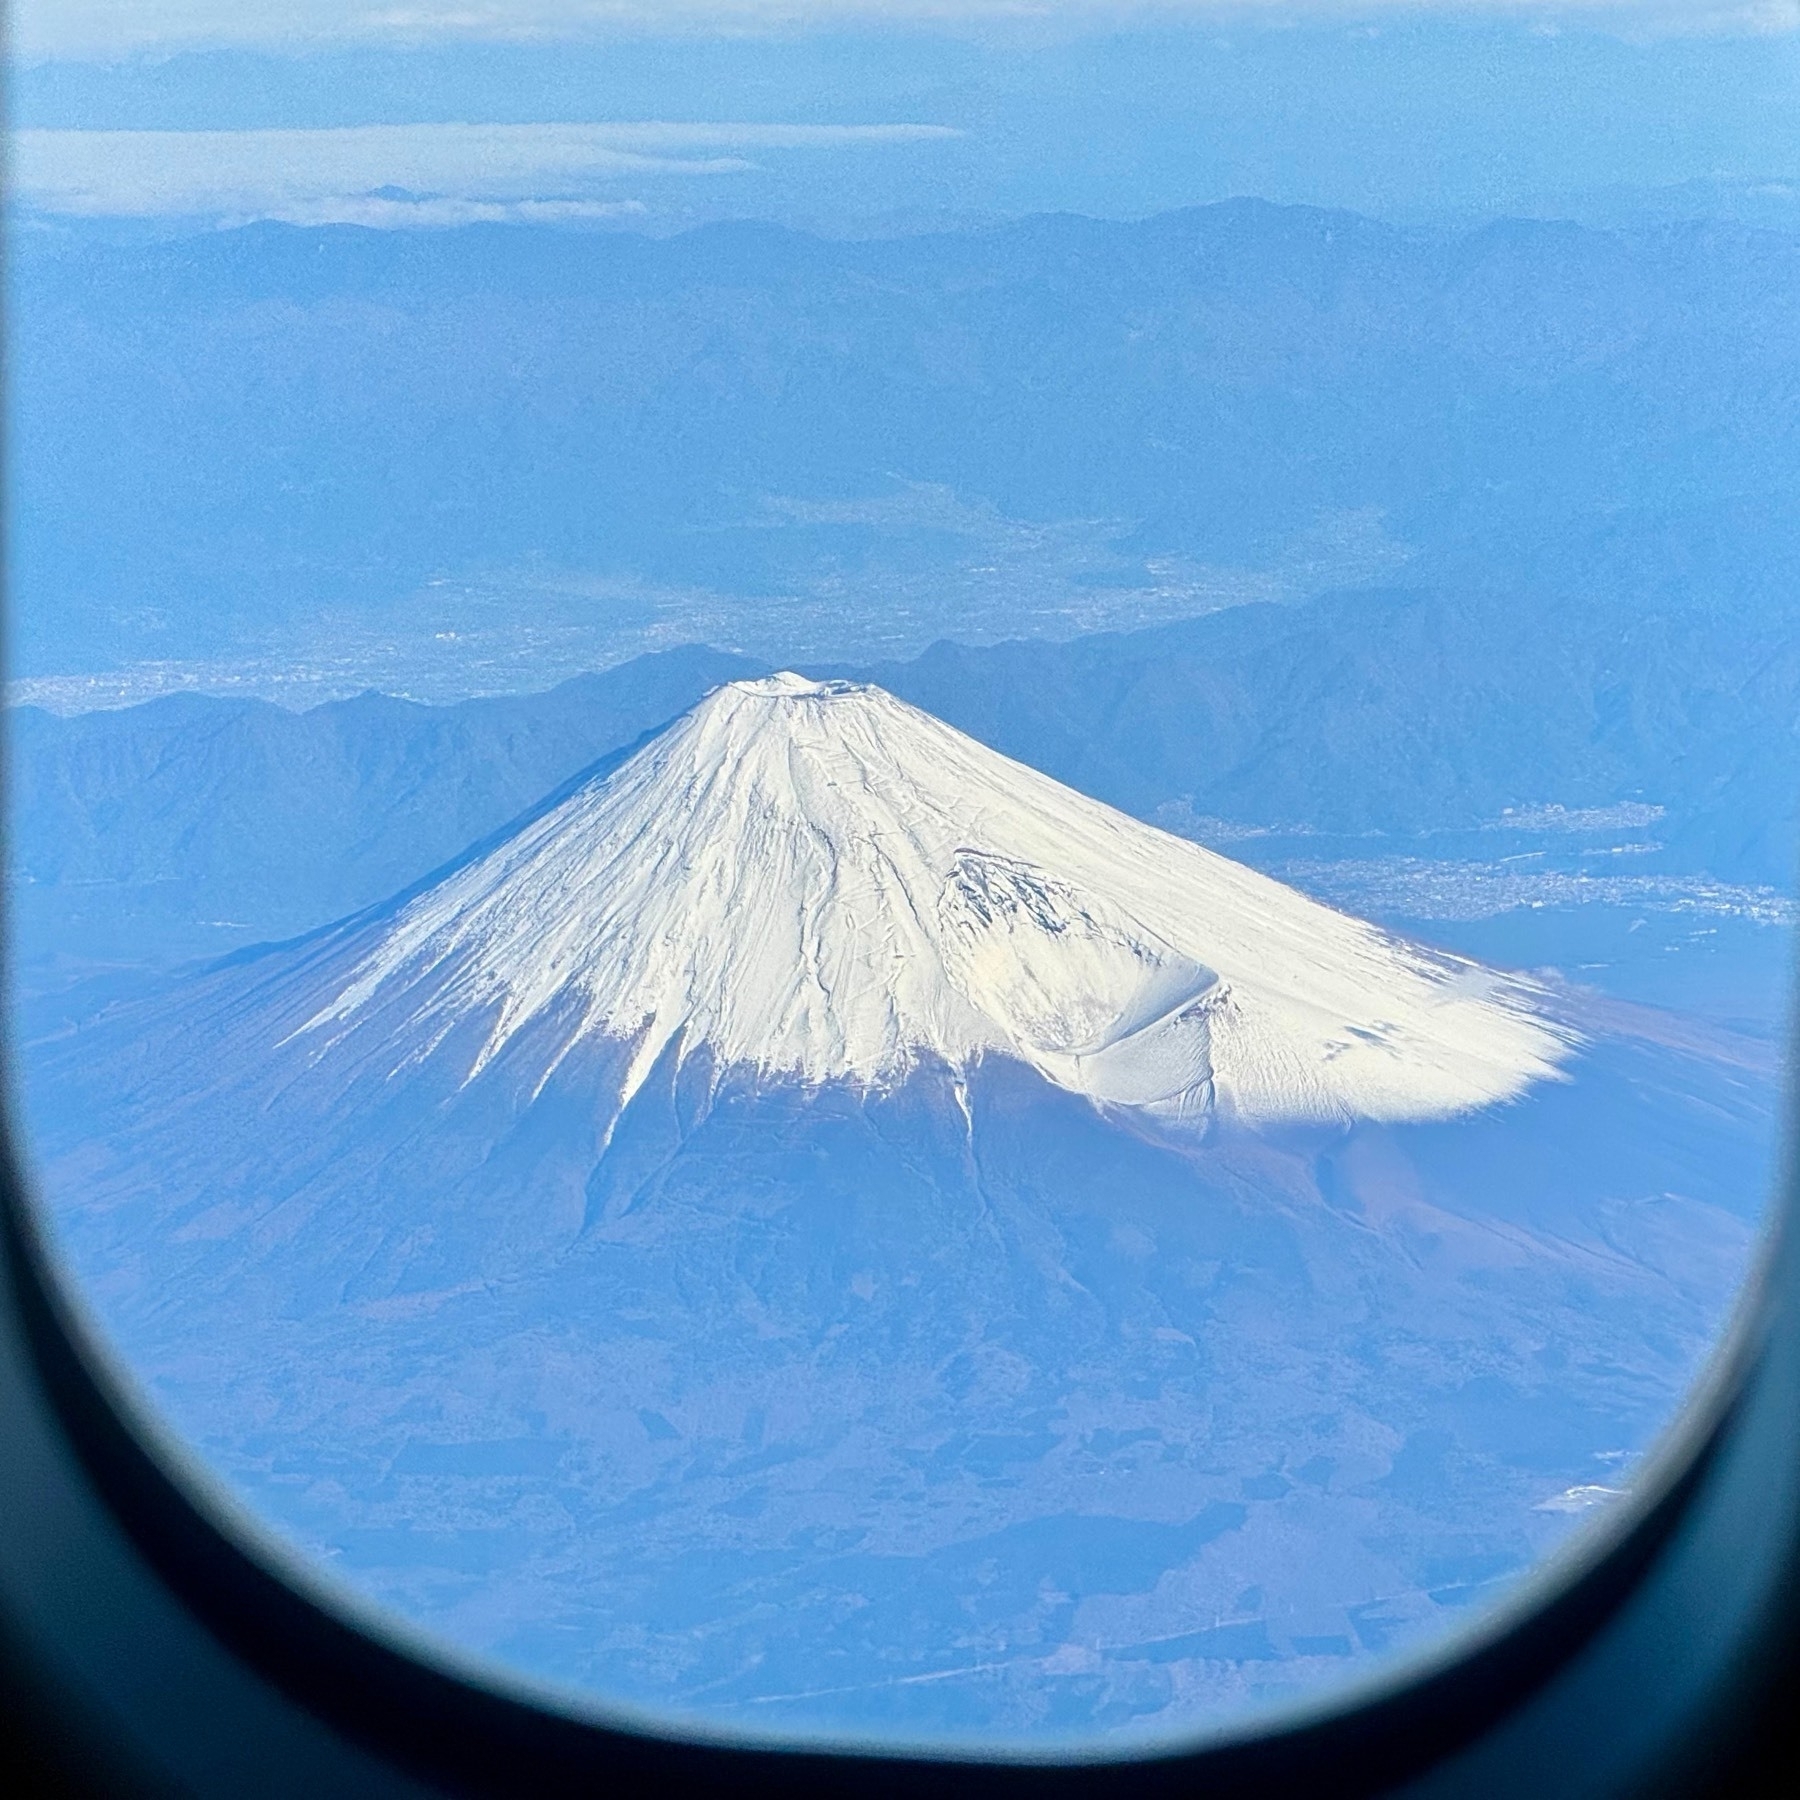 Snow-capped Mount Fuji with cloudless skies, taken through a plane window